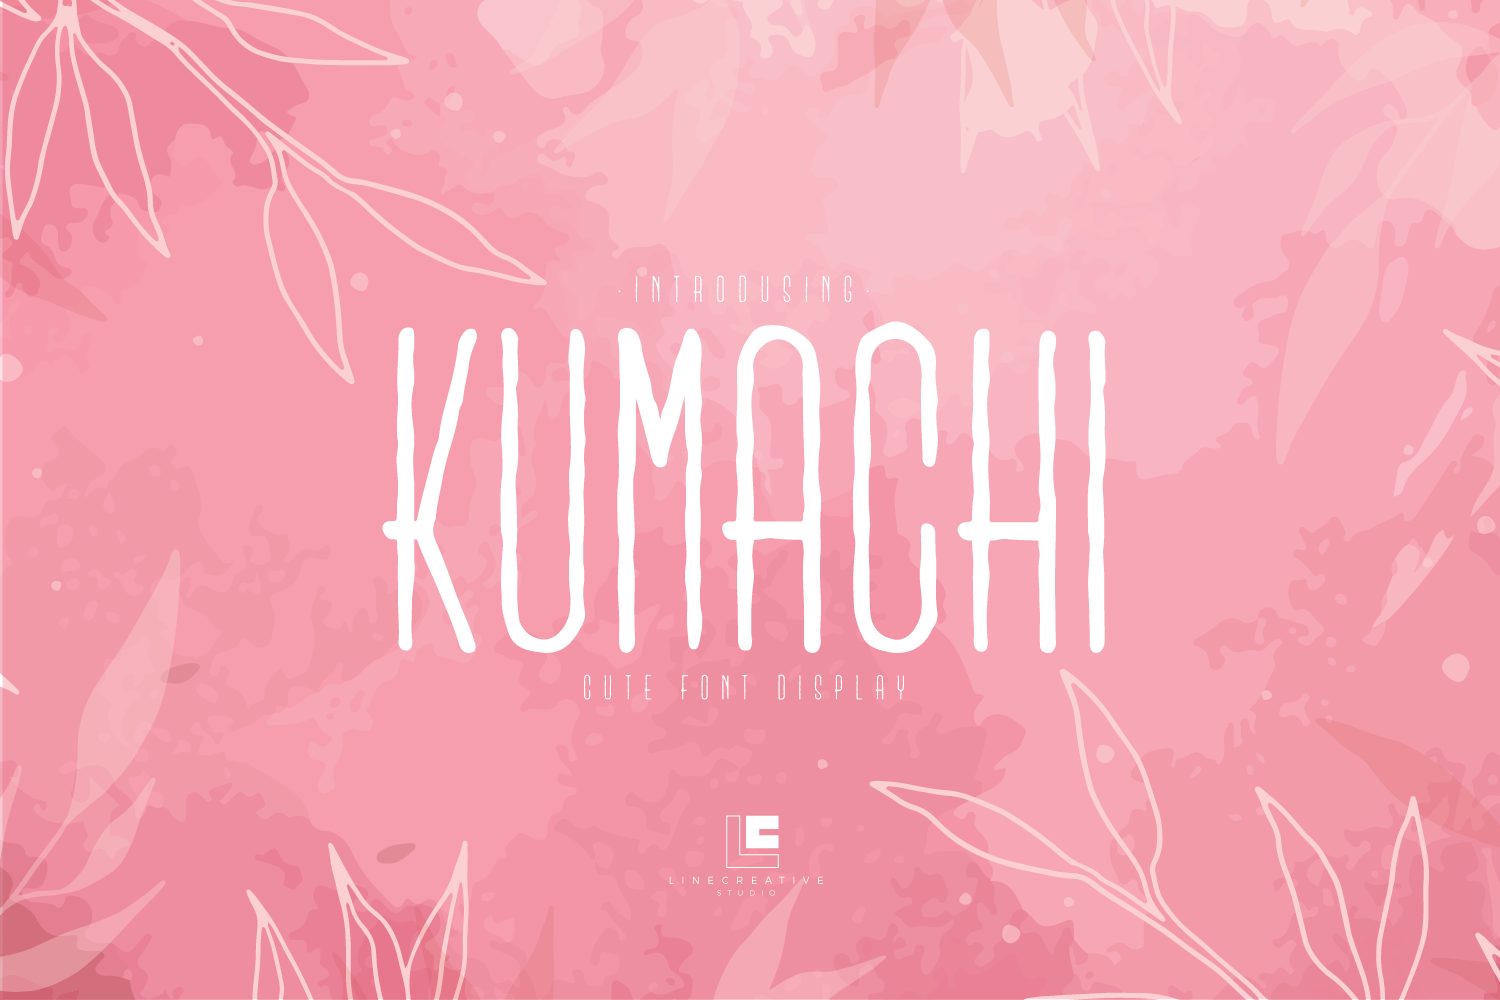 Kumachi